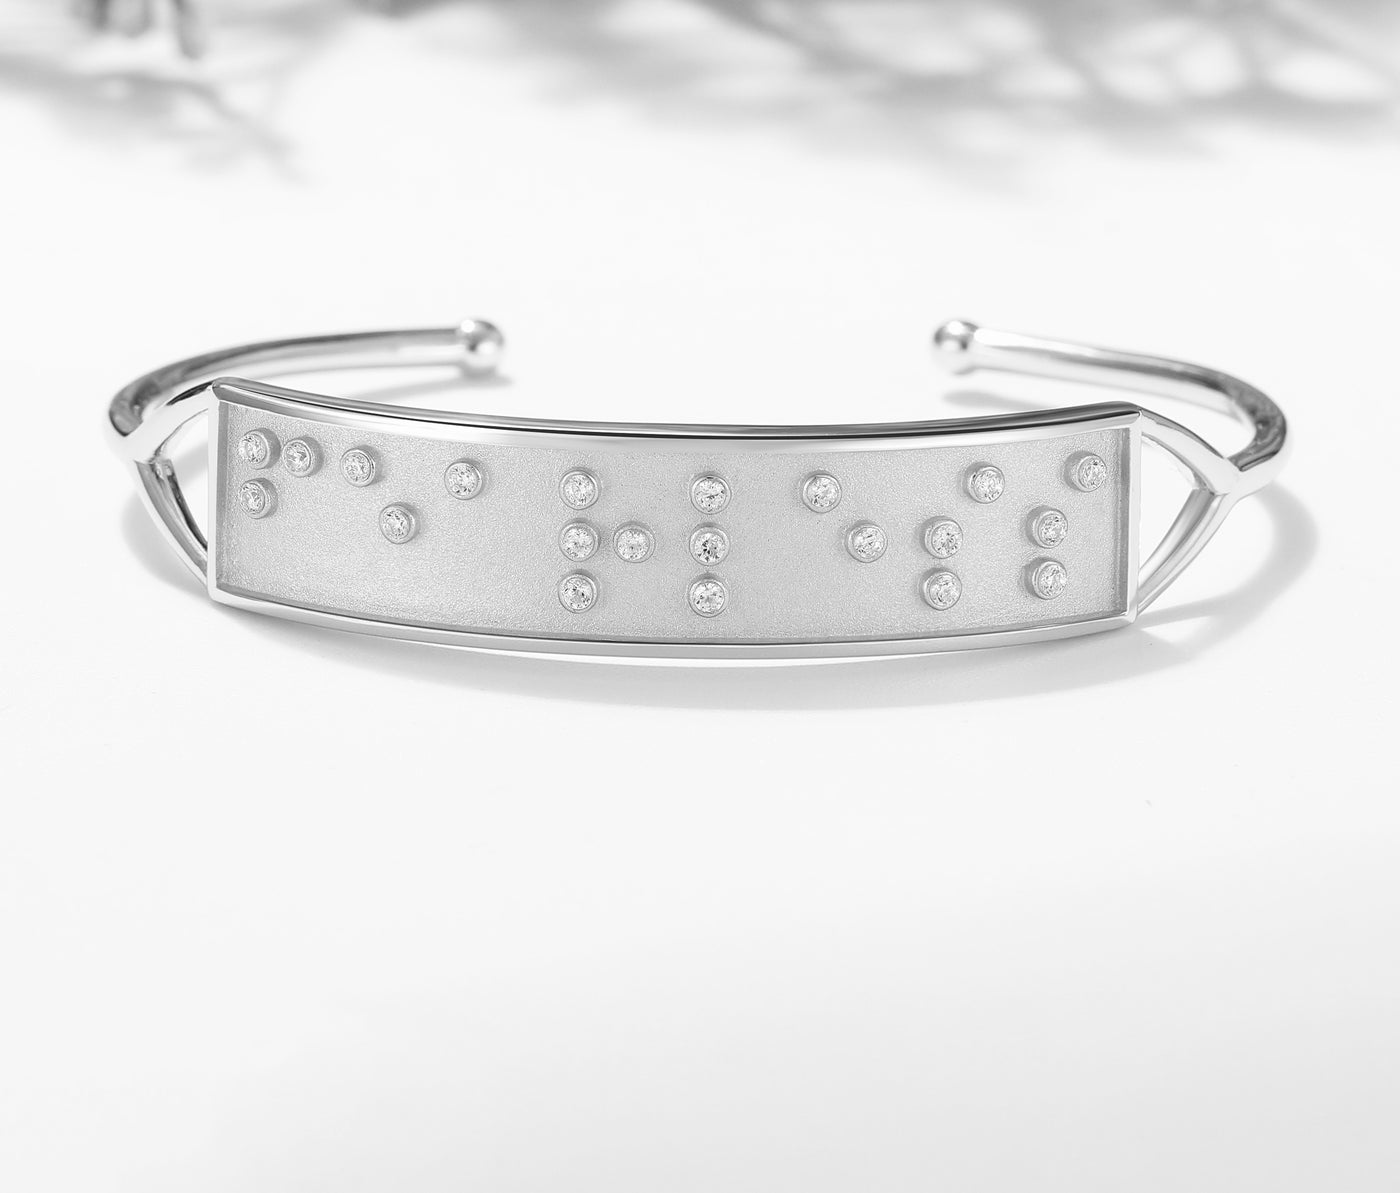 Touchstone FEARLESS Hidden Messages Braille Inspired Silver Cuff Bracelet